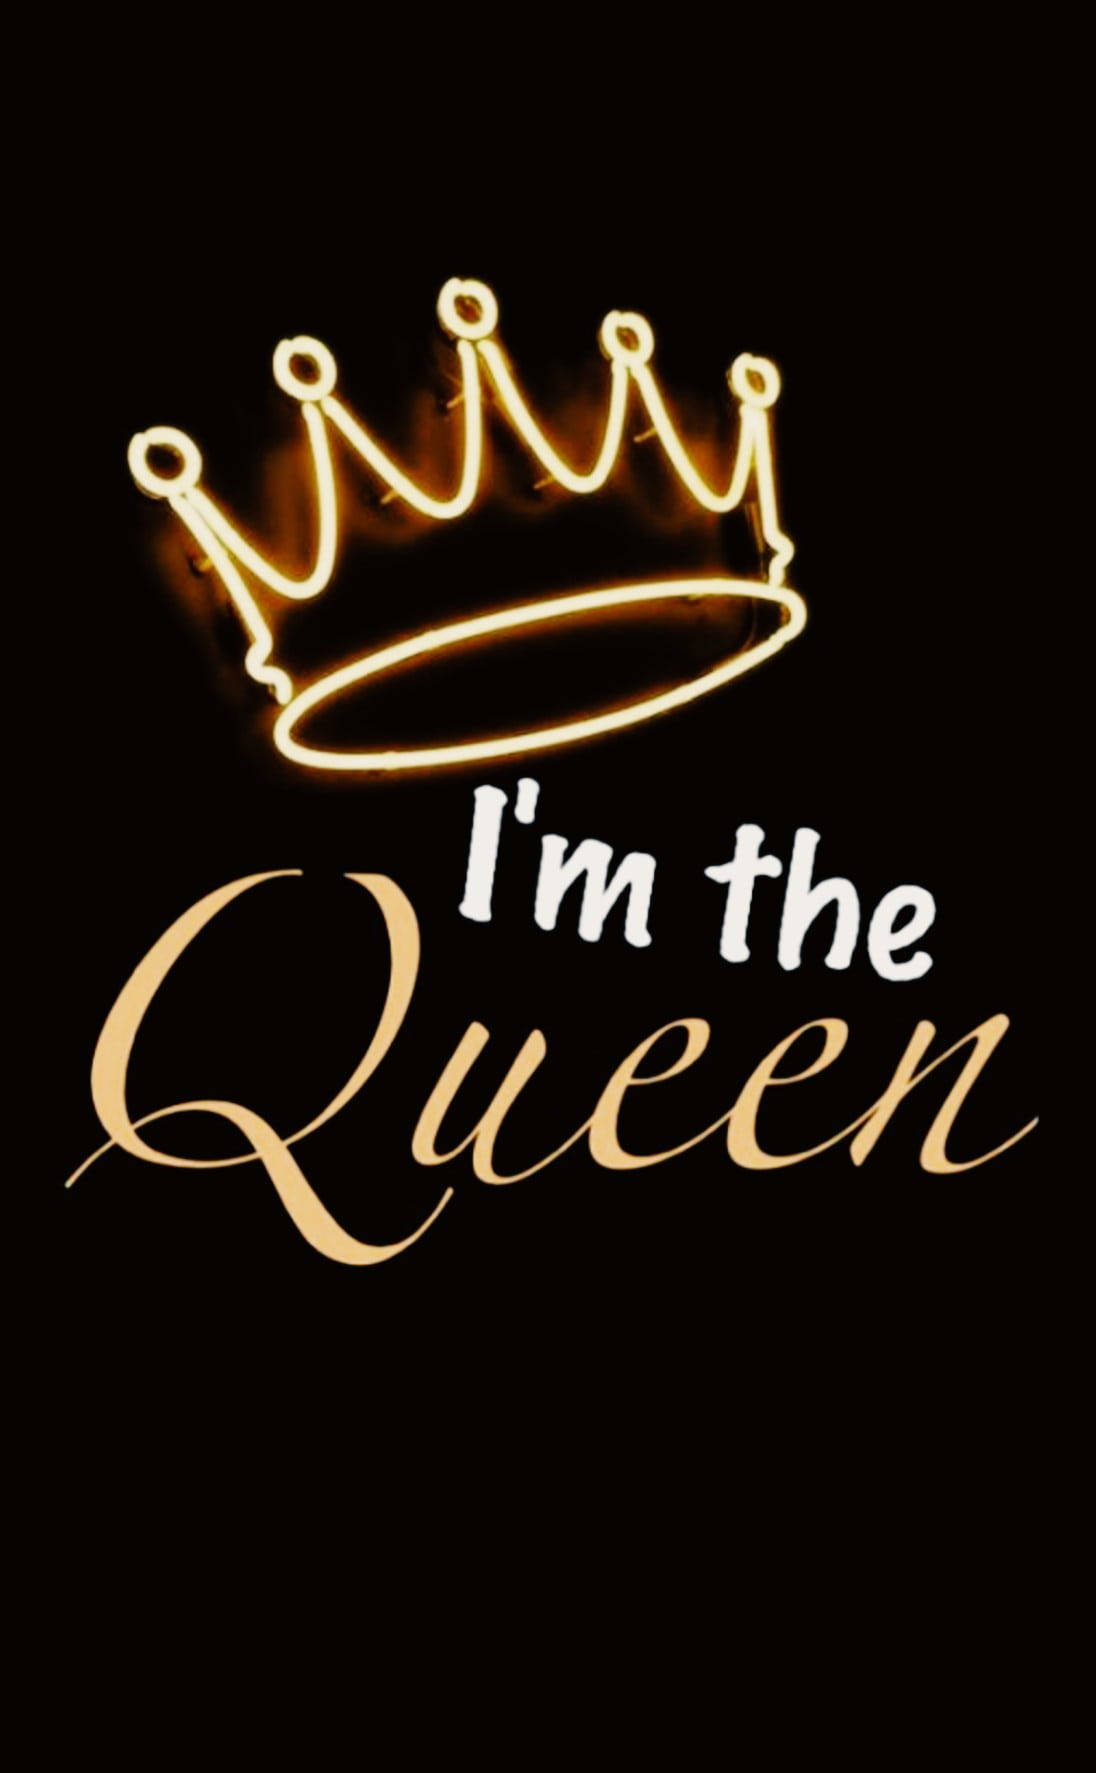 Download Black Queen With Glowing Crown Wallpaper | Wallpapers.com